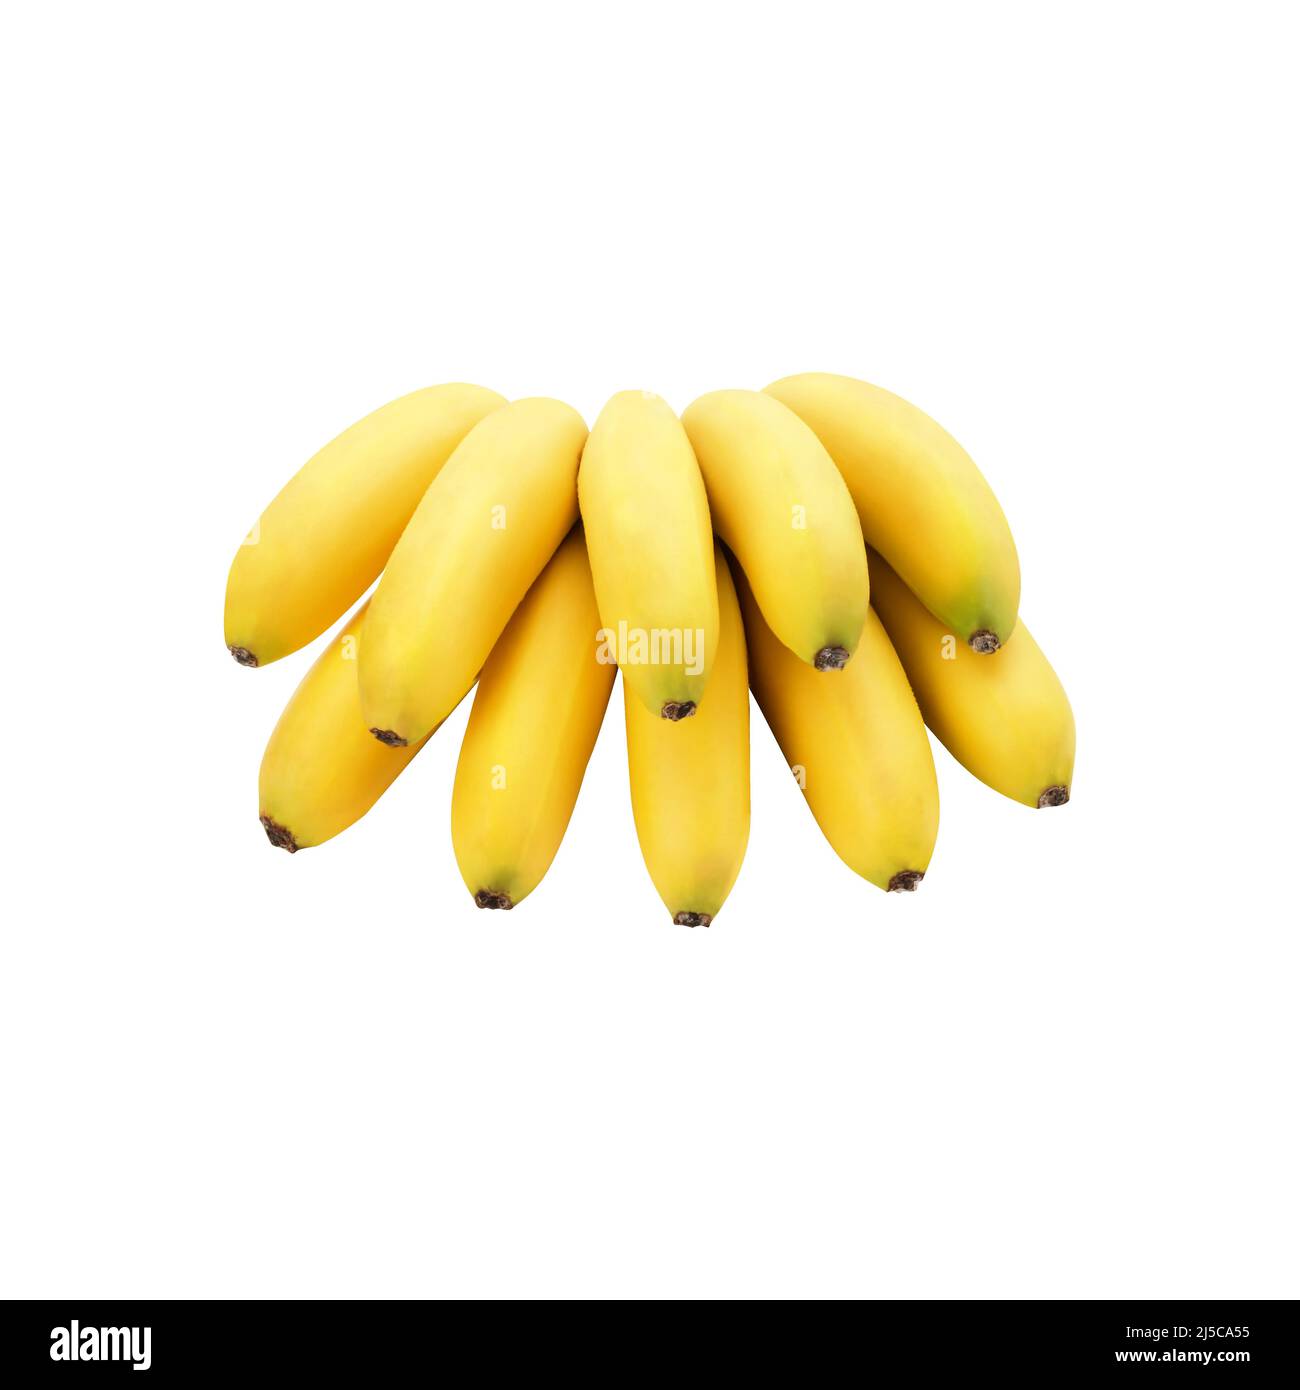 https://c8.alamy.com/comp/2J5CA55/single-banana-isolated-beautiful-edible-yellow-banana-bunch-of-bananas-2J5CA55.jpg